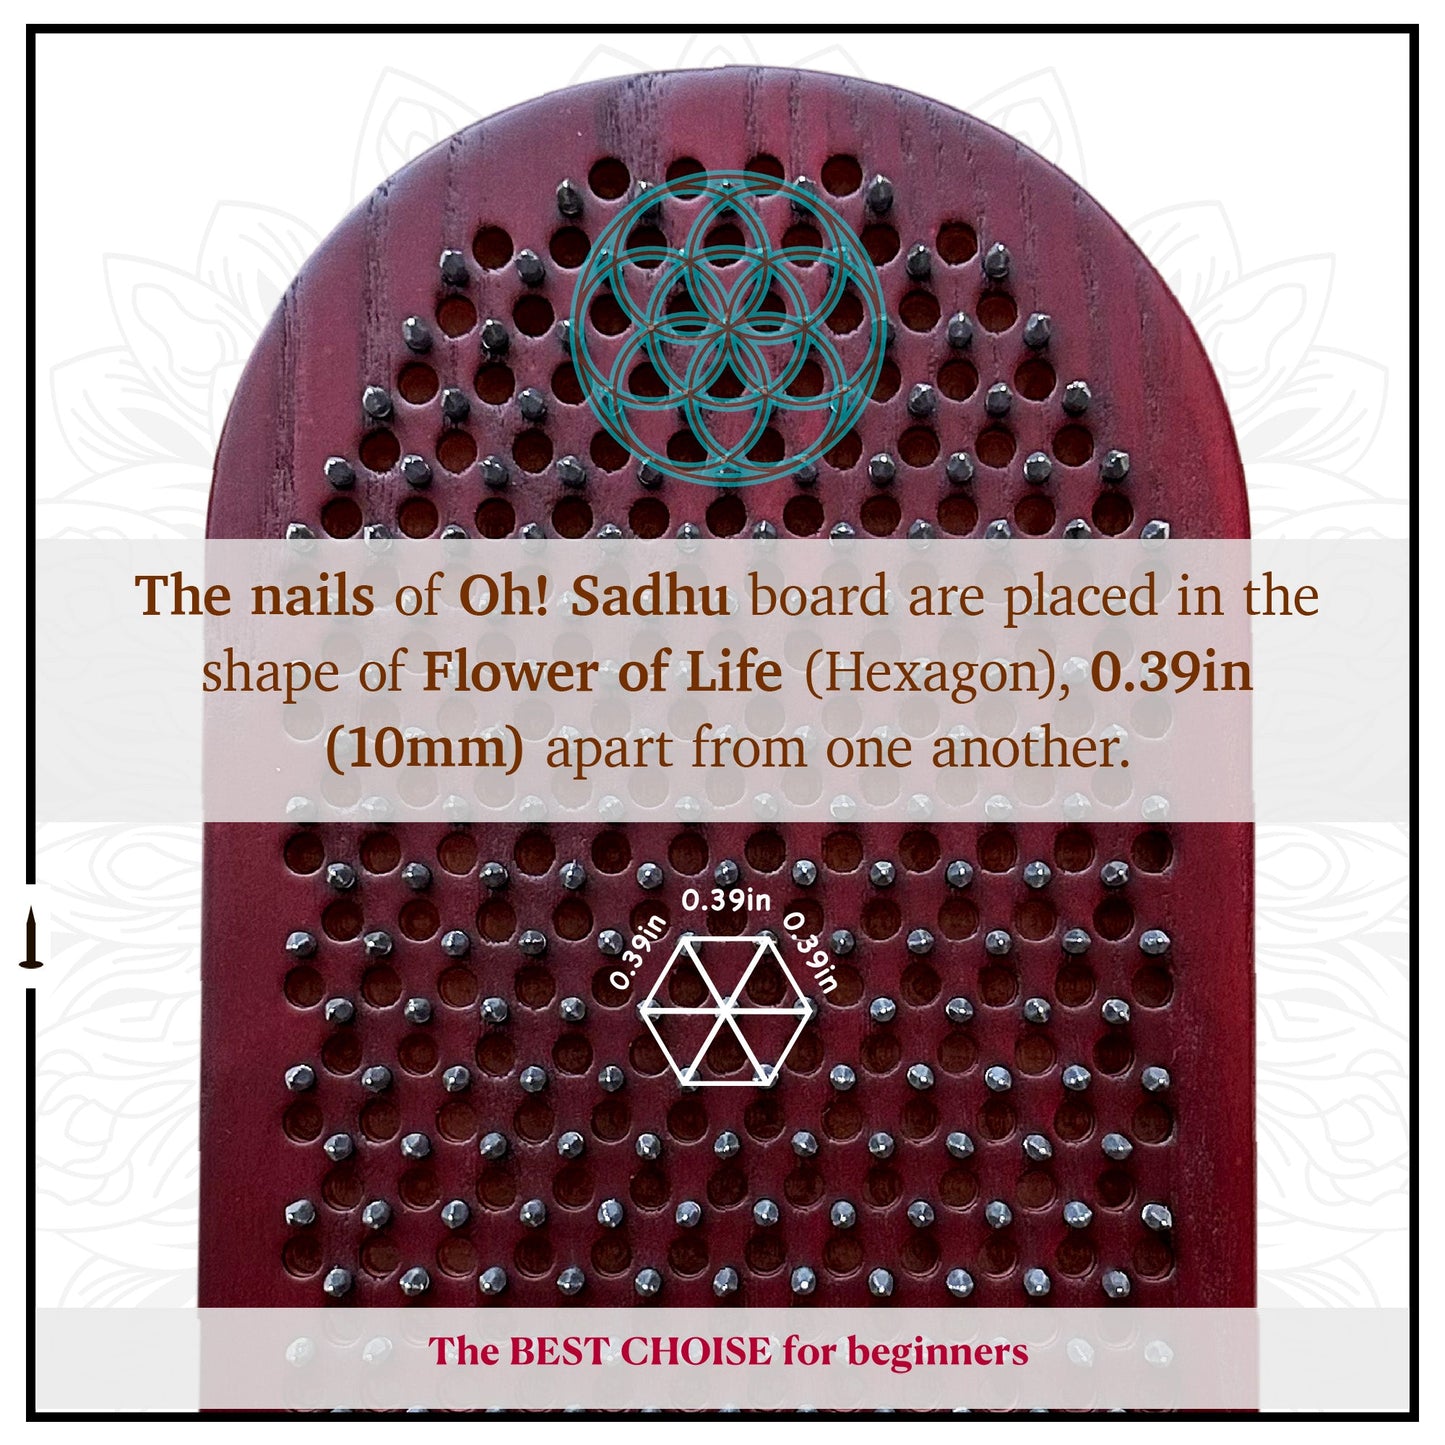 Nails on Sadhu board arranged in shape flower of life